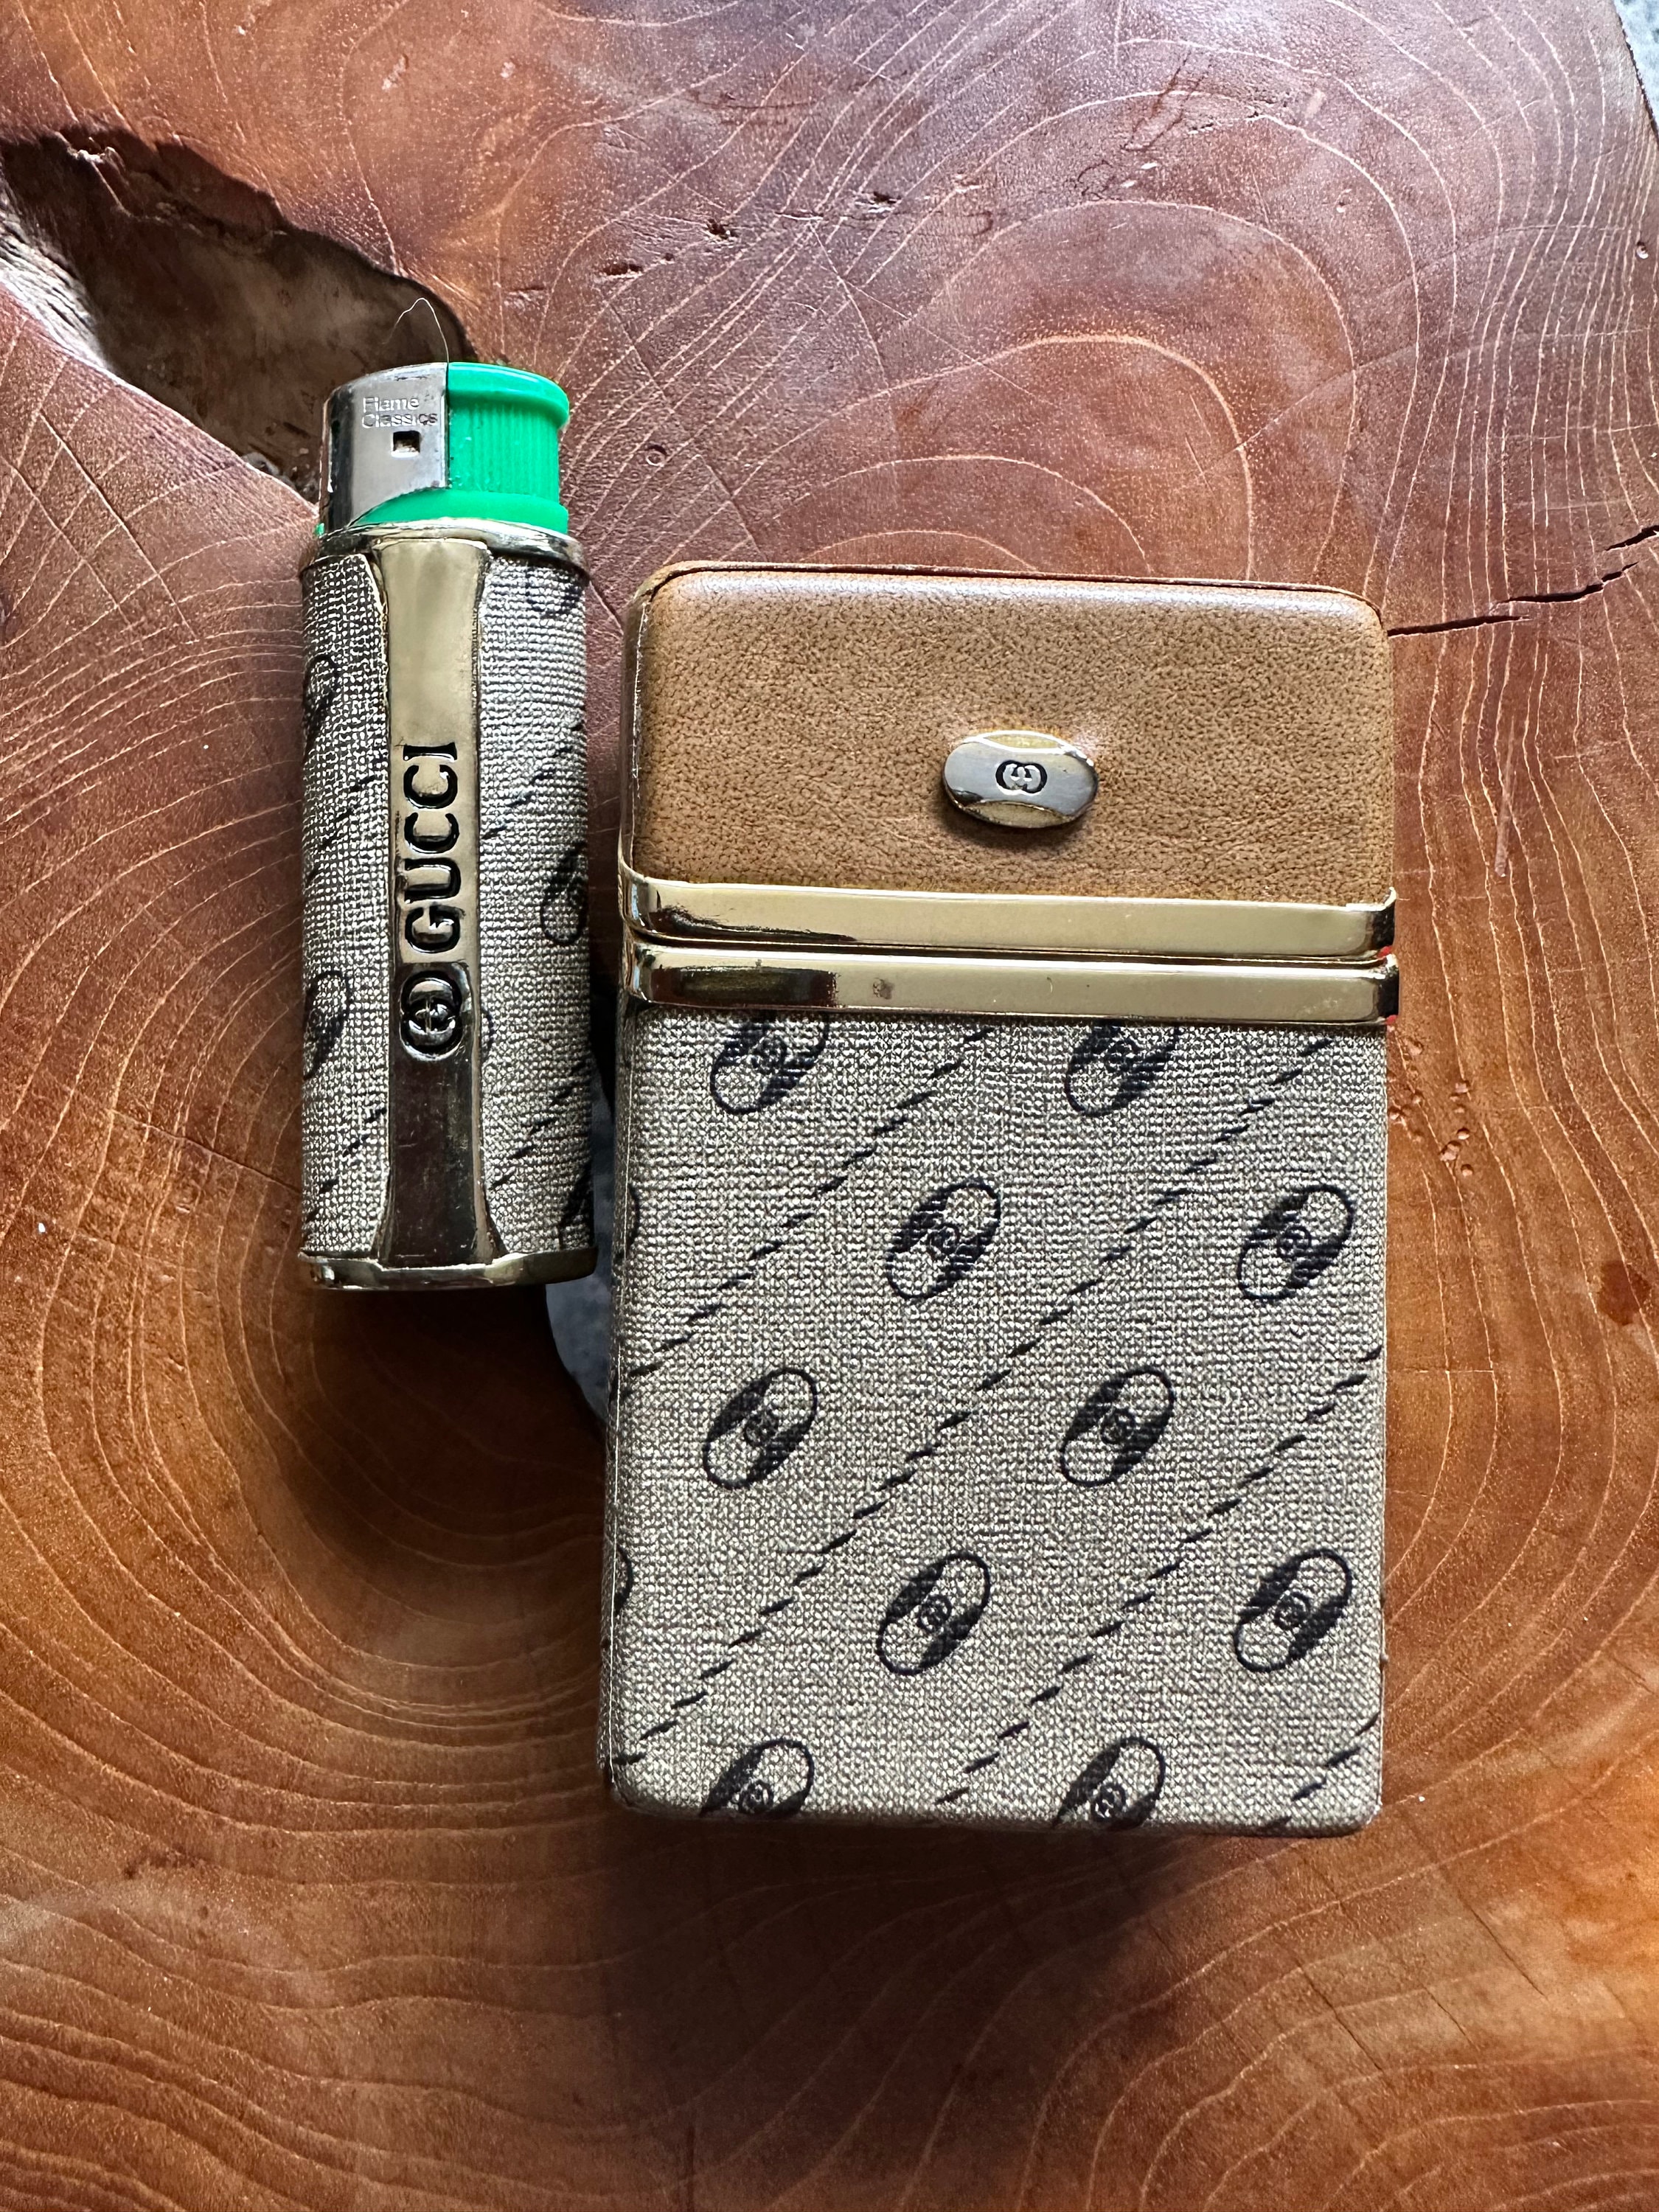 Gucci cigarette case with lighter holder